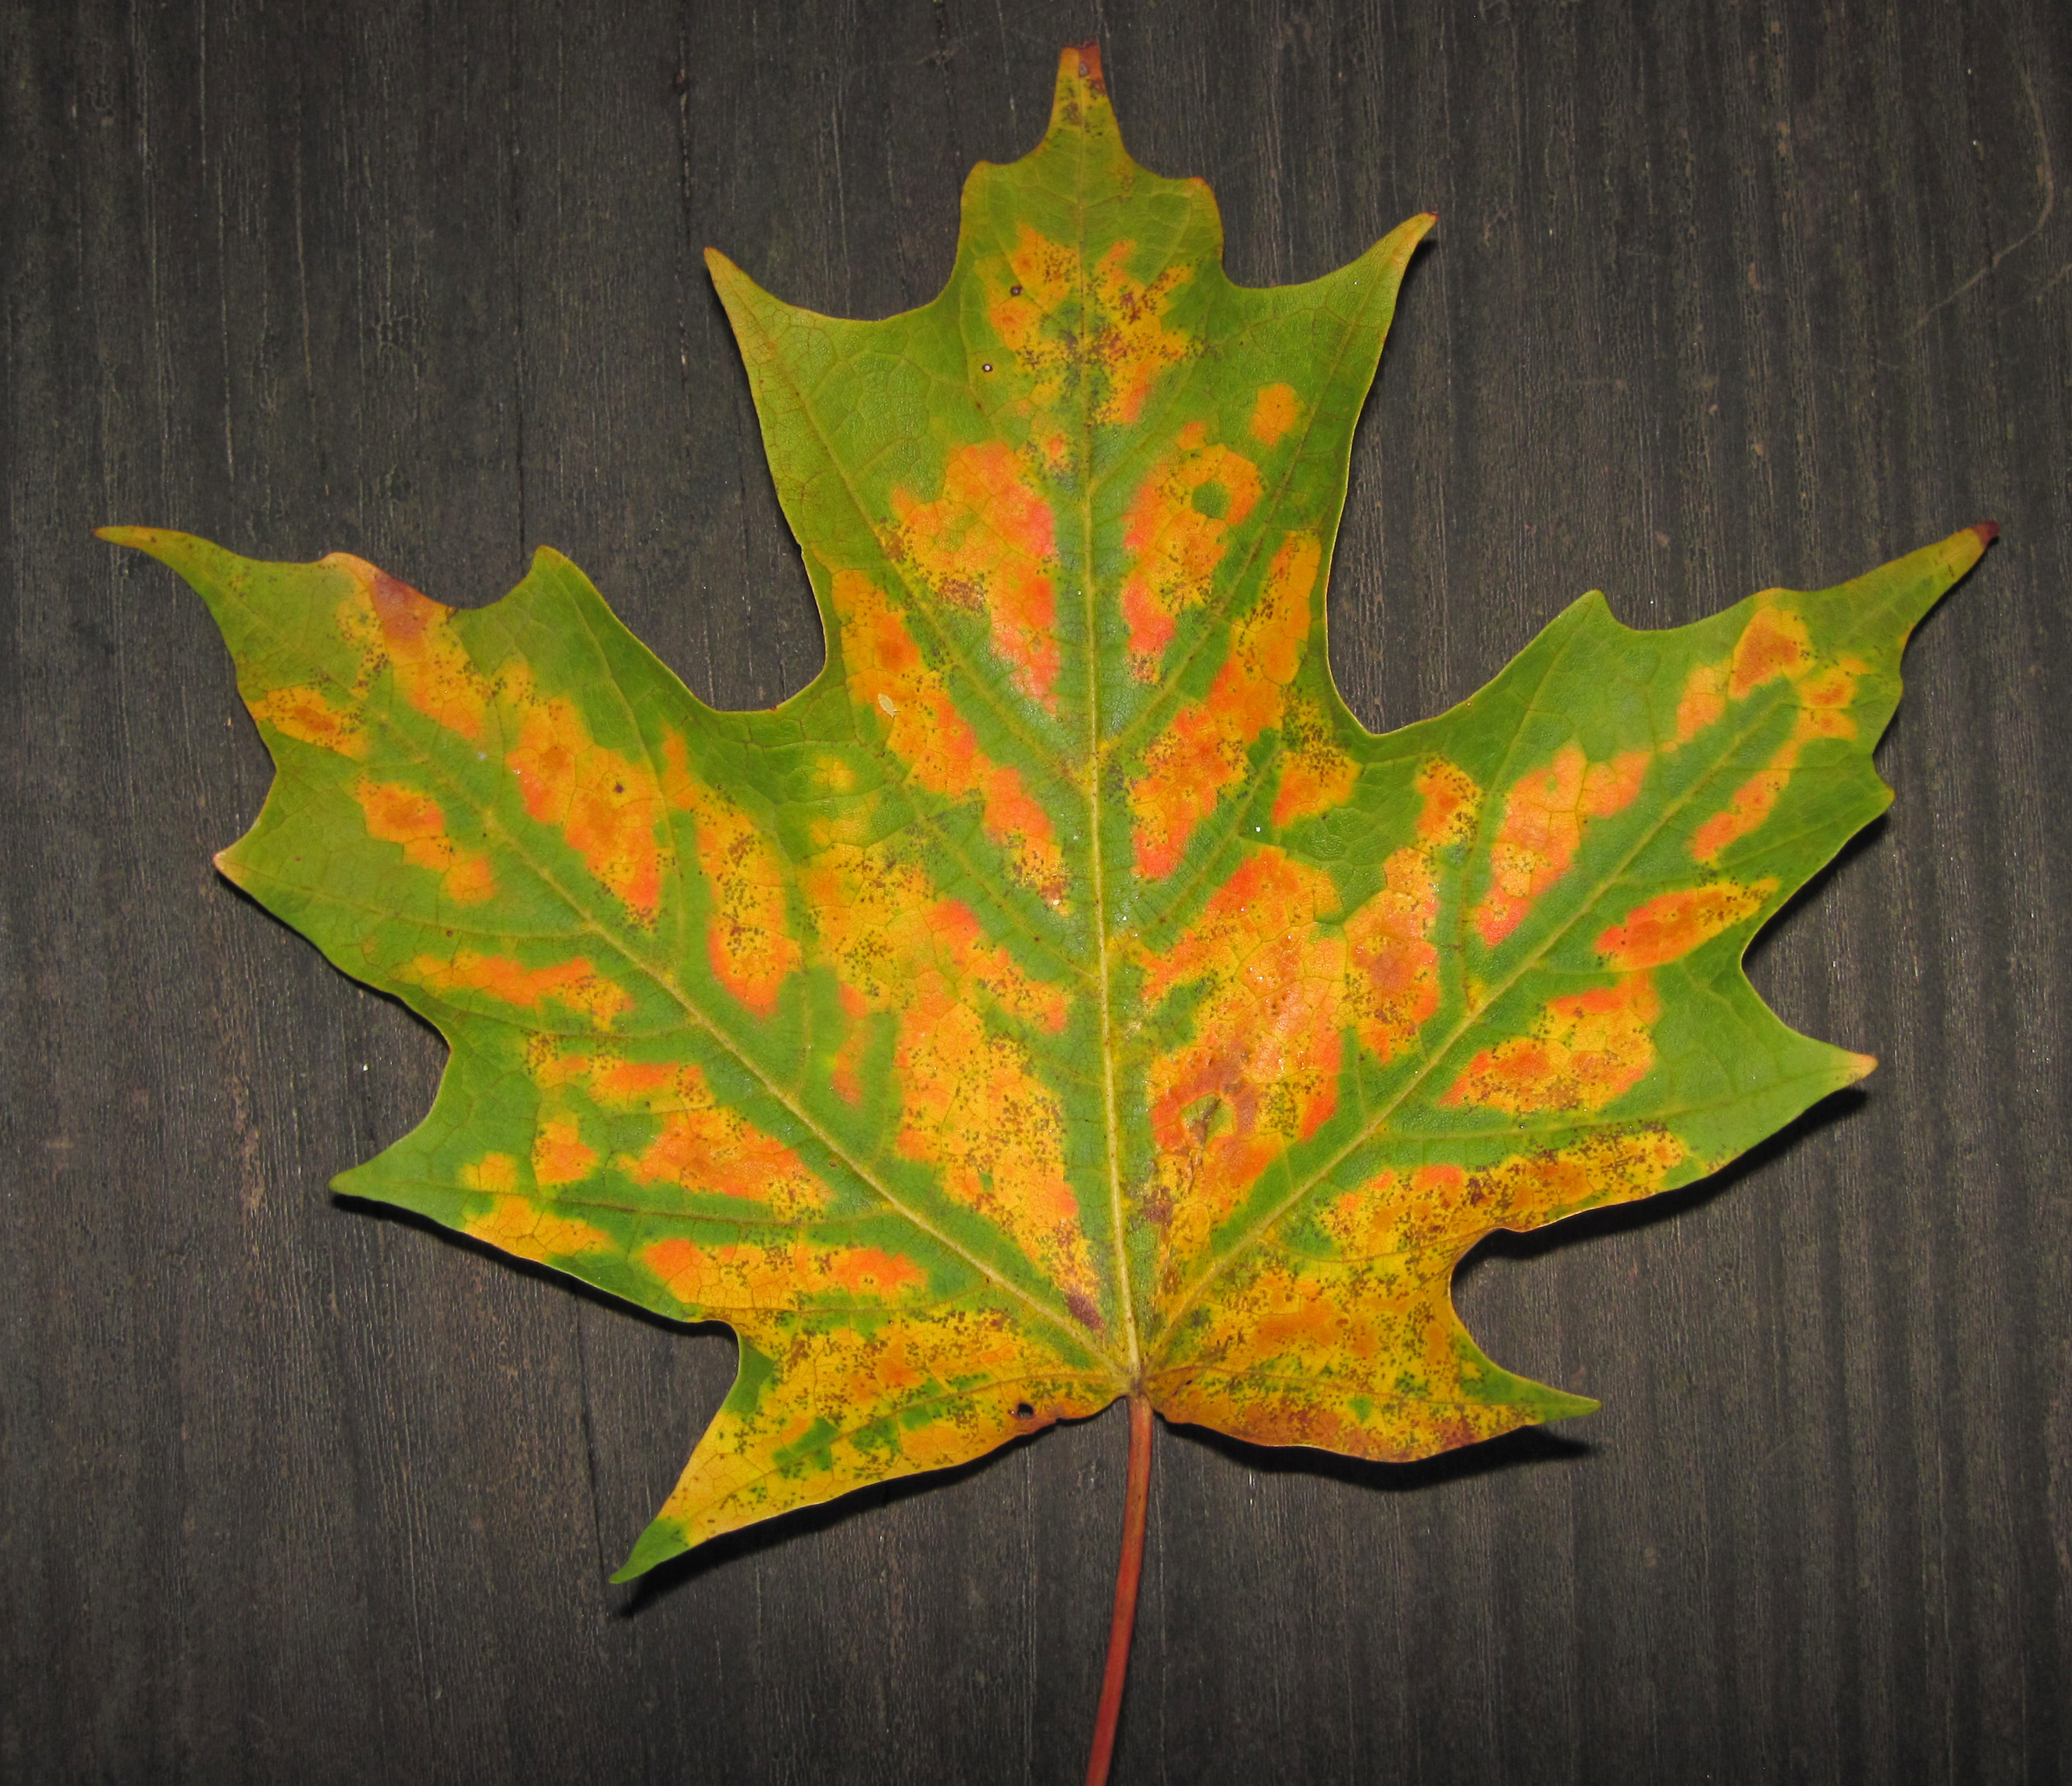 File:Background wallpaper maple leaves.jpg - Wikimedia Commons